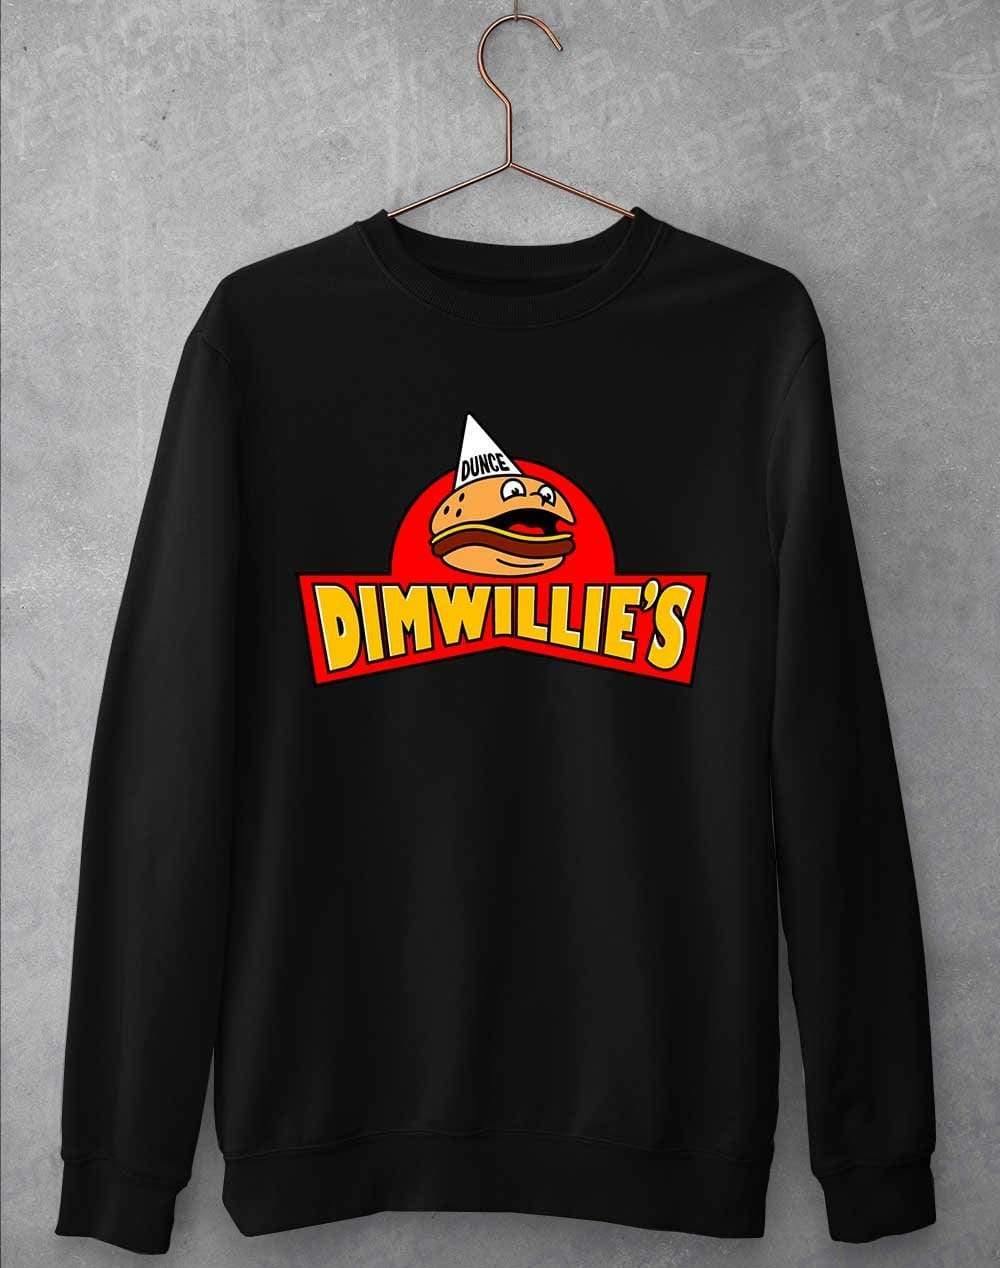 Dimwillies Sweatshirt S / Jet Black  - Off World Tees